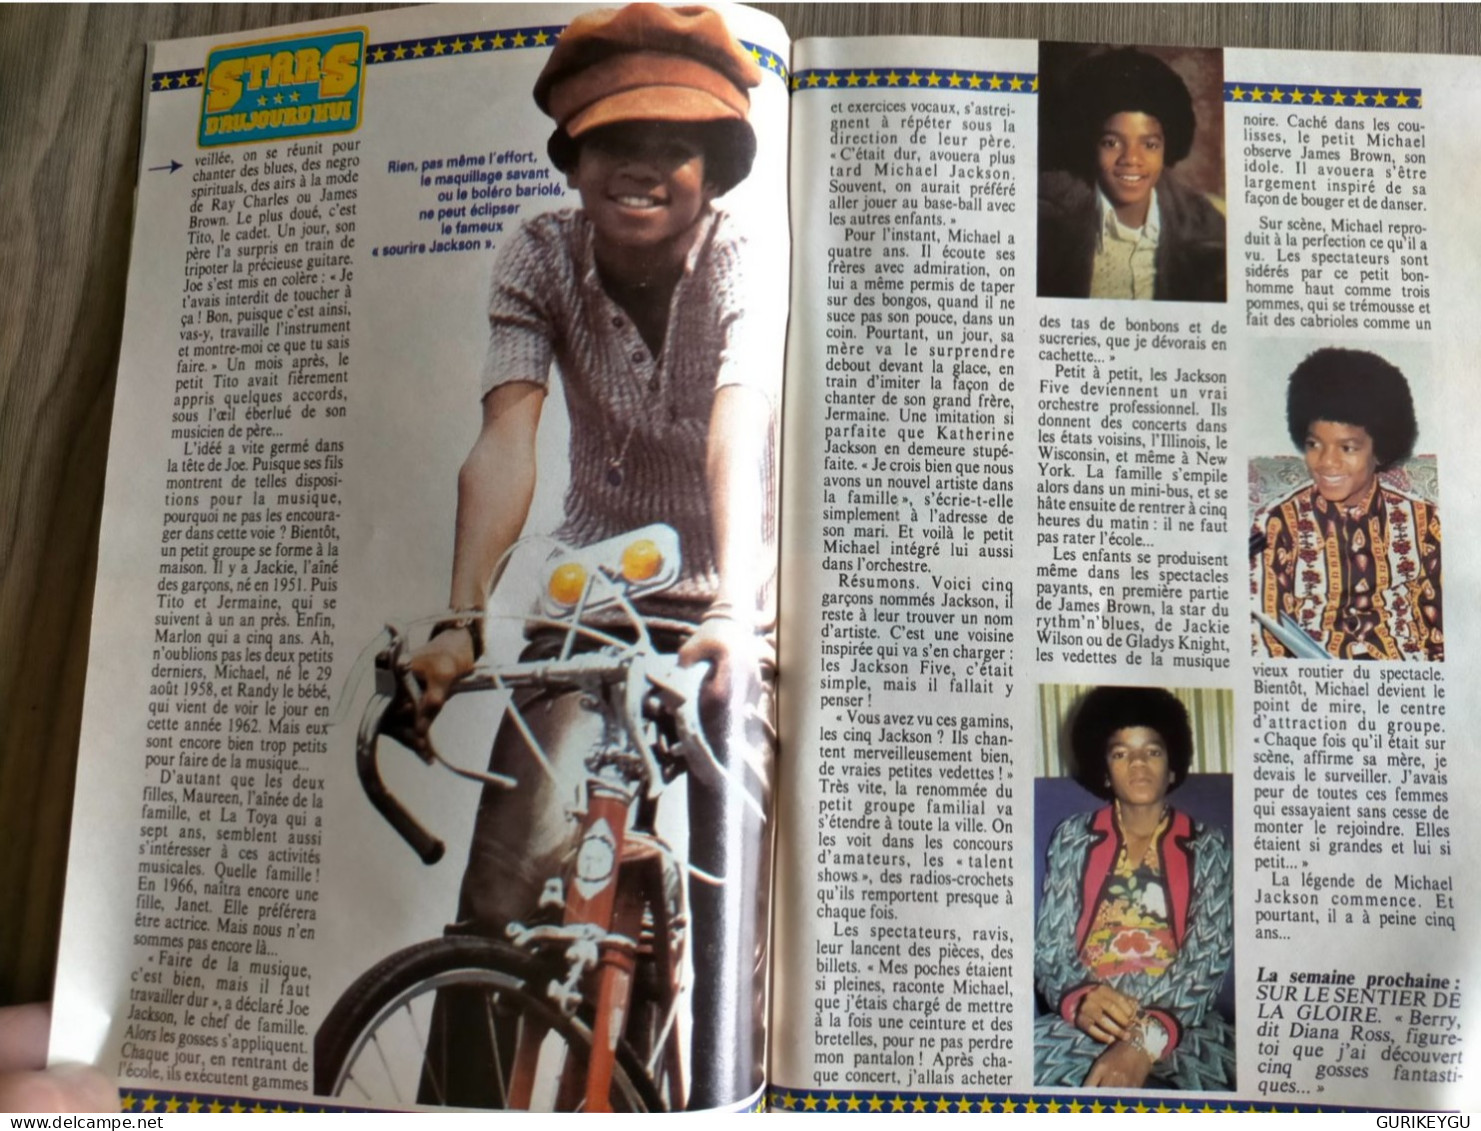 Magazine TELE POCHE N° 955 MICHAEL JACKSON YVES MONTAND 29/05/1984 TTBE - 1950 - Nu